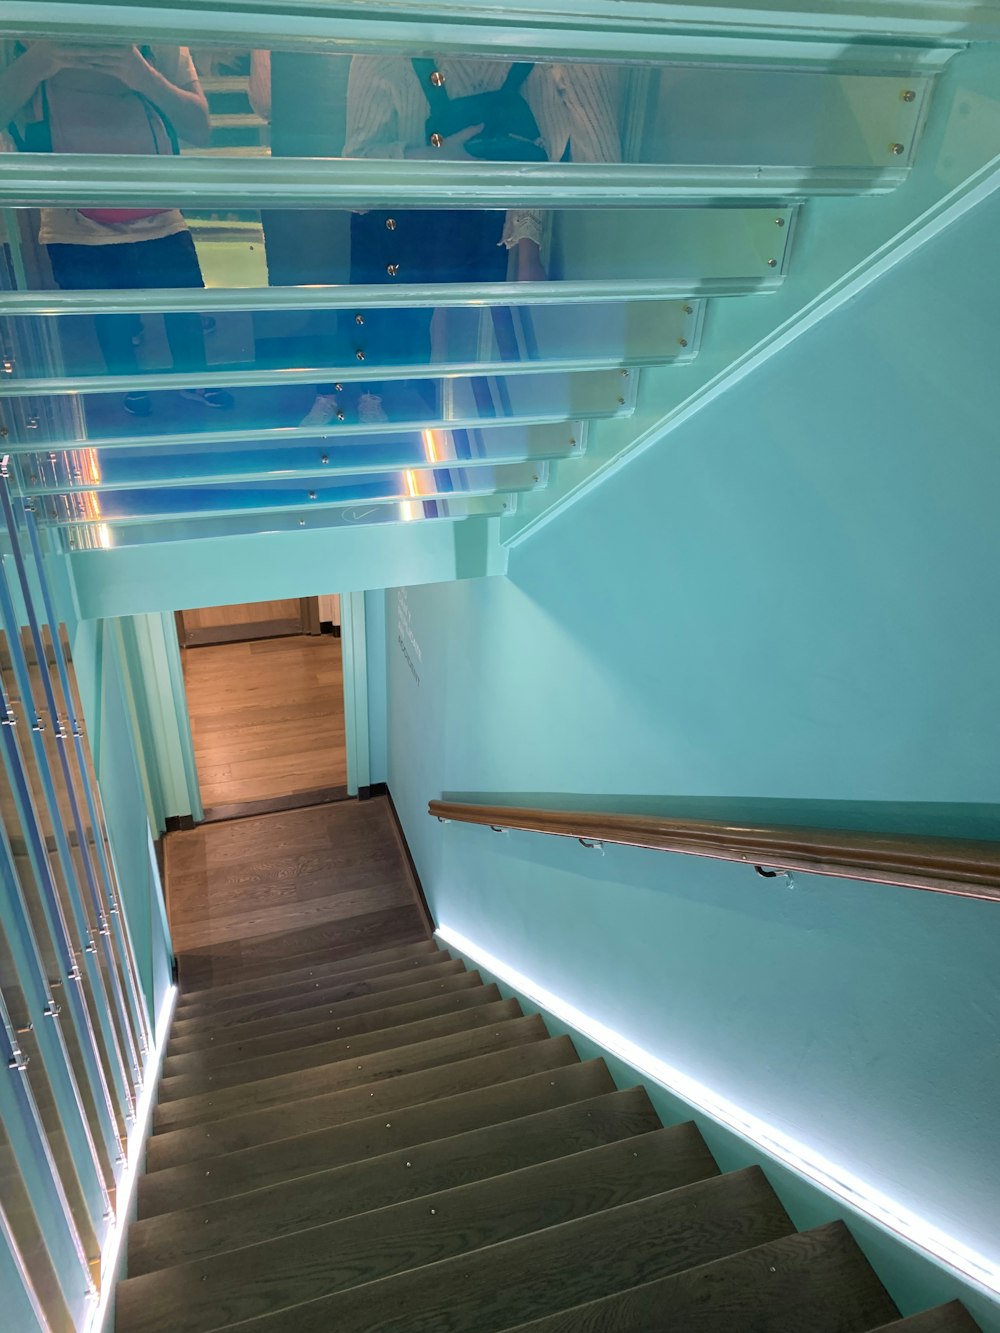 Escalera de madera marrón con barandillas azules